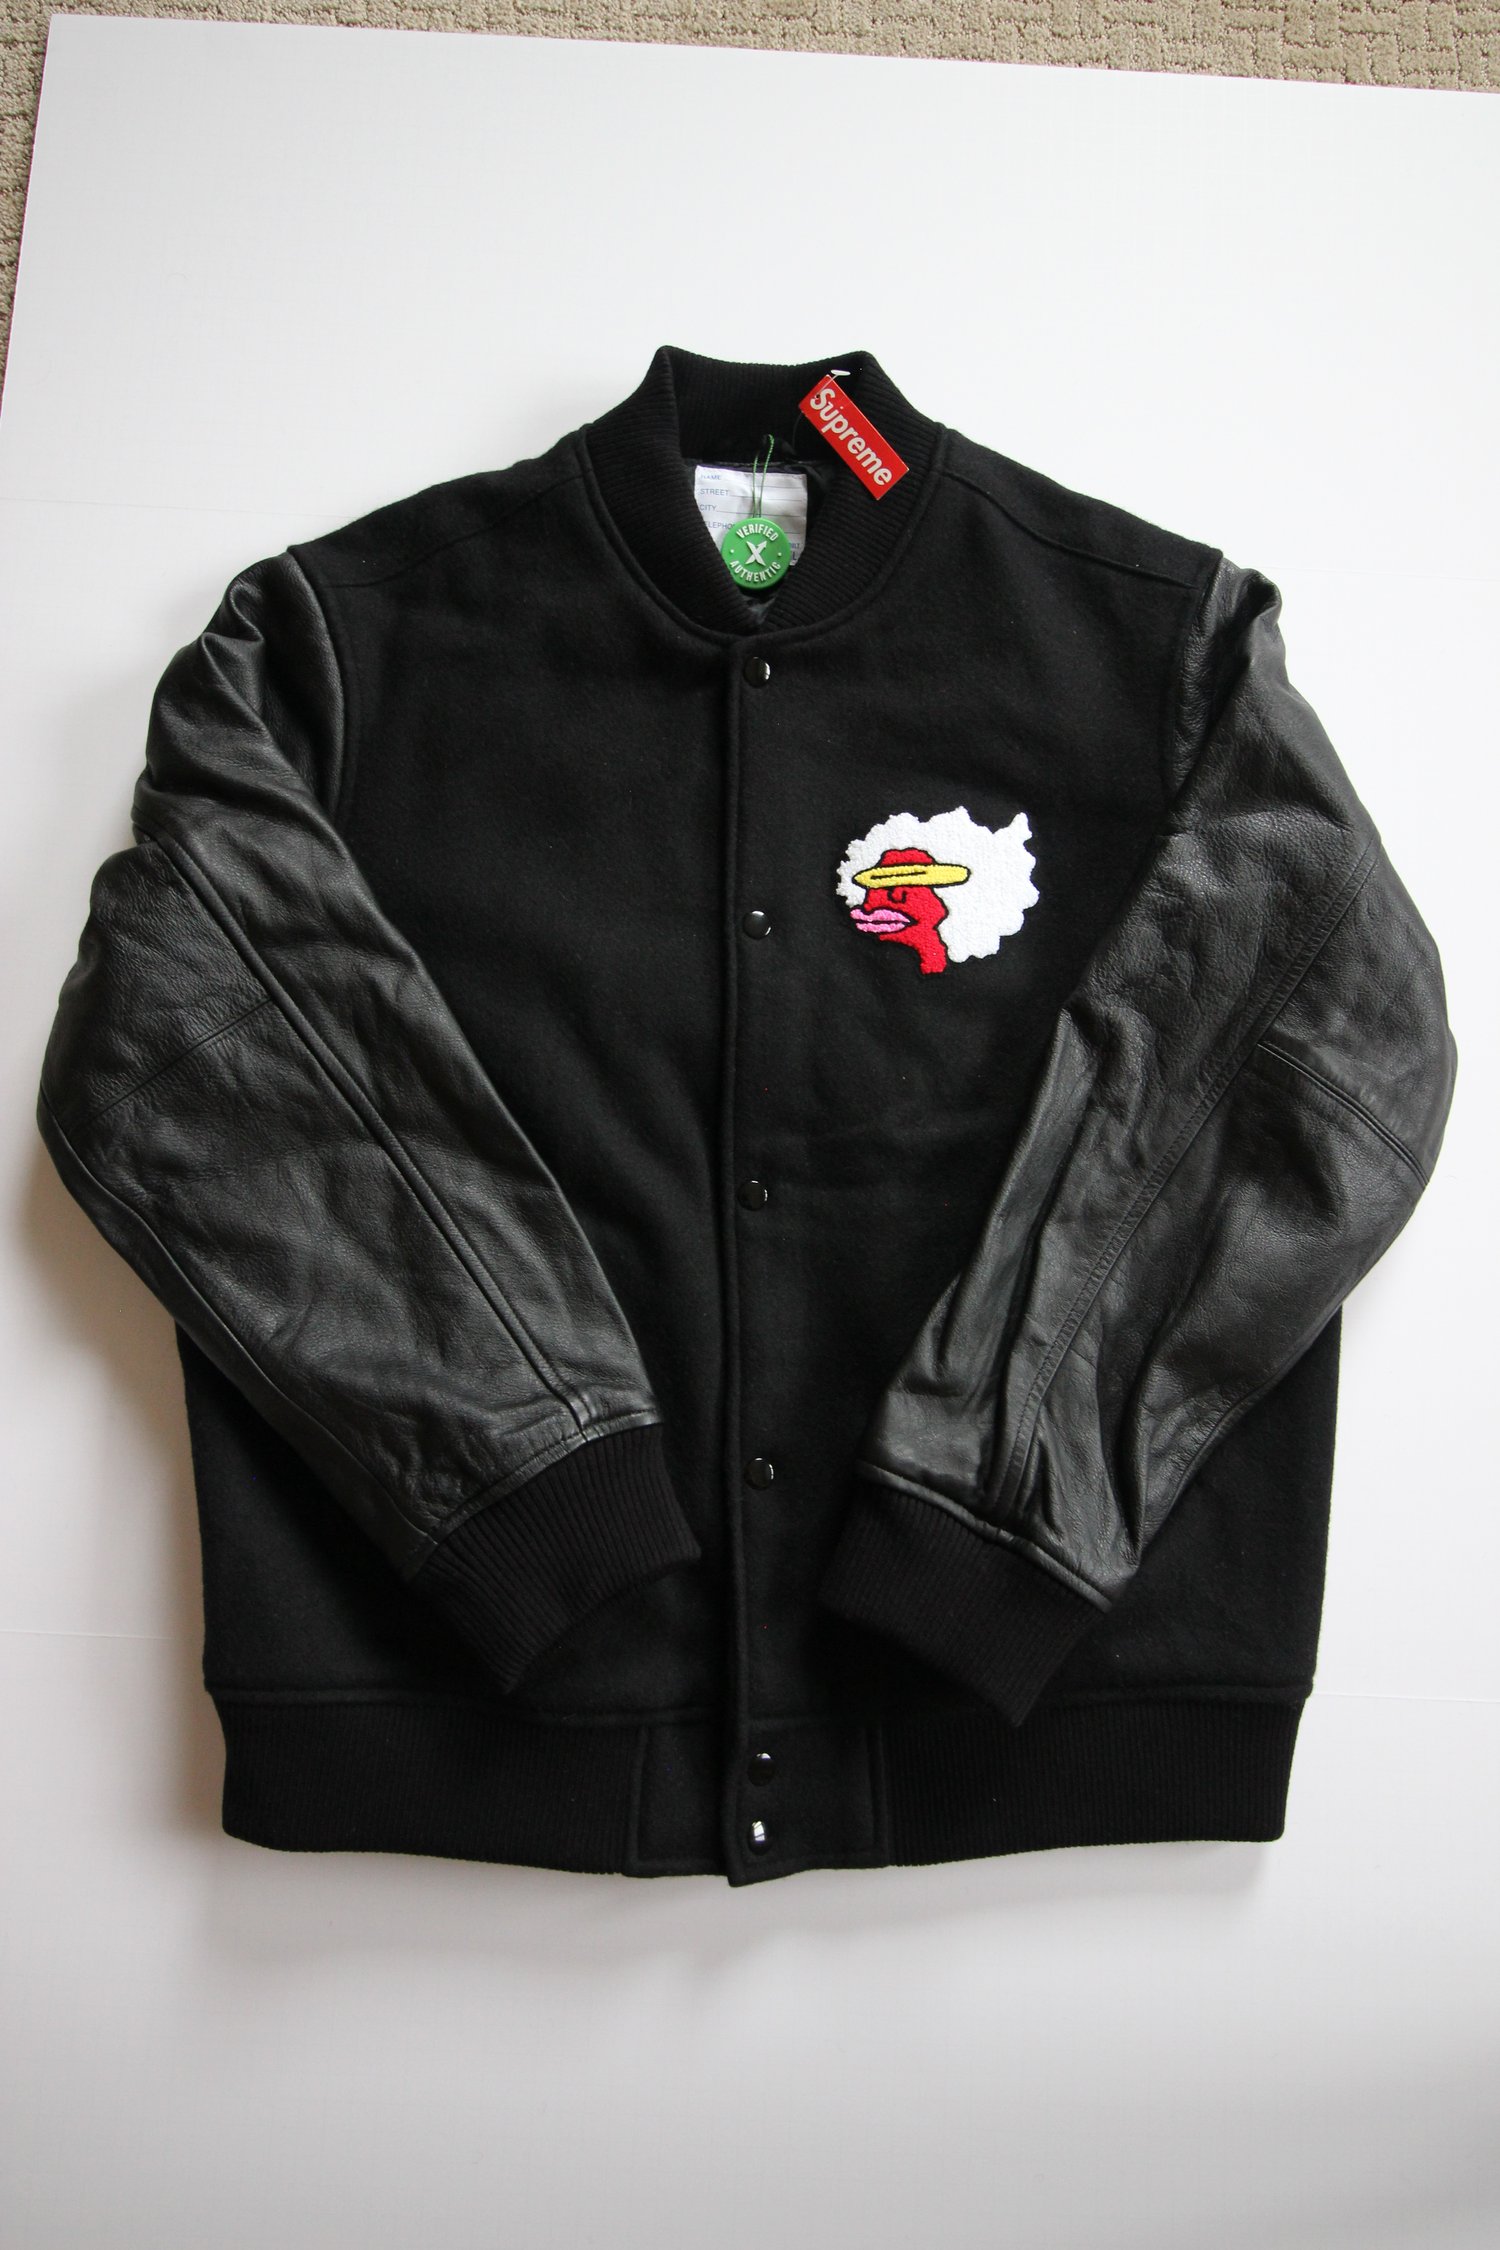 Supreme Gonz Ramm Varsity Jacket 'Black'Colo